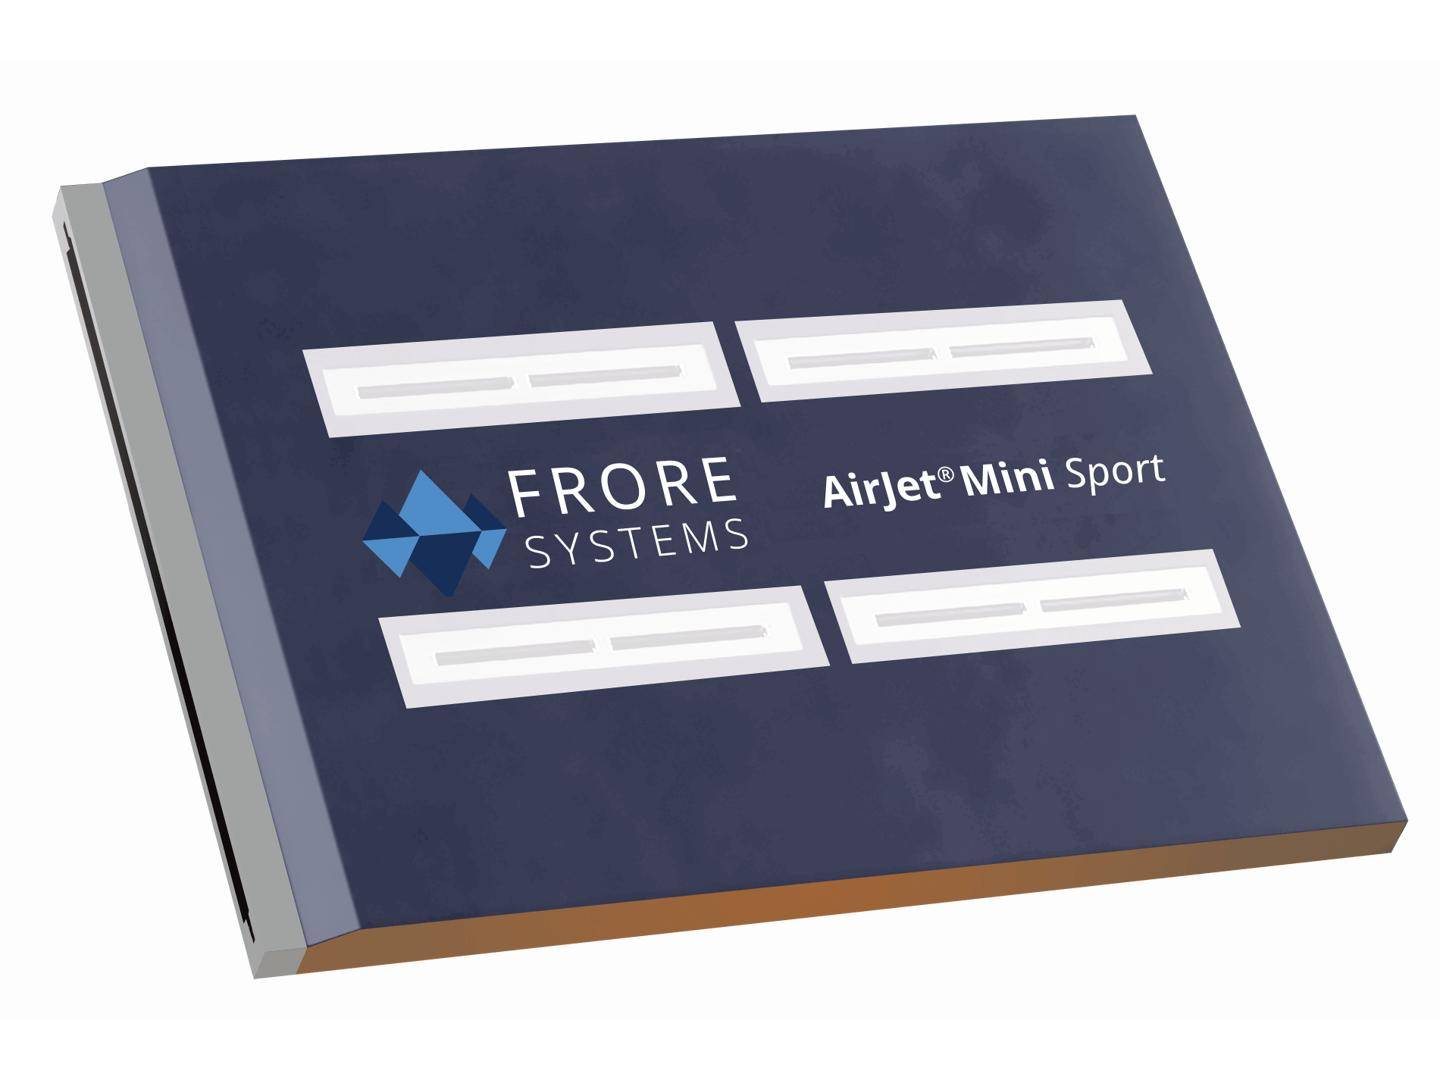 Frore推出AirJet Mini Sport固态主动散热芯片 提升设备AI处理能力